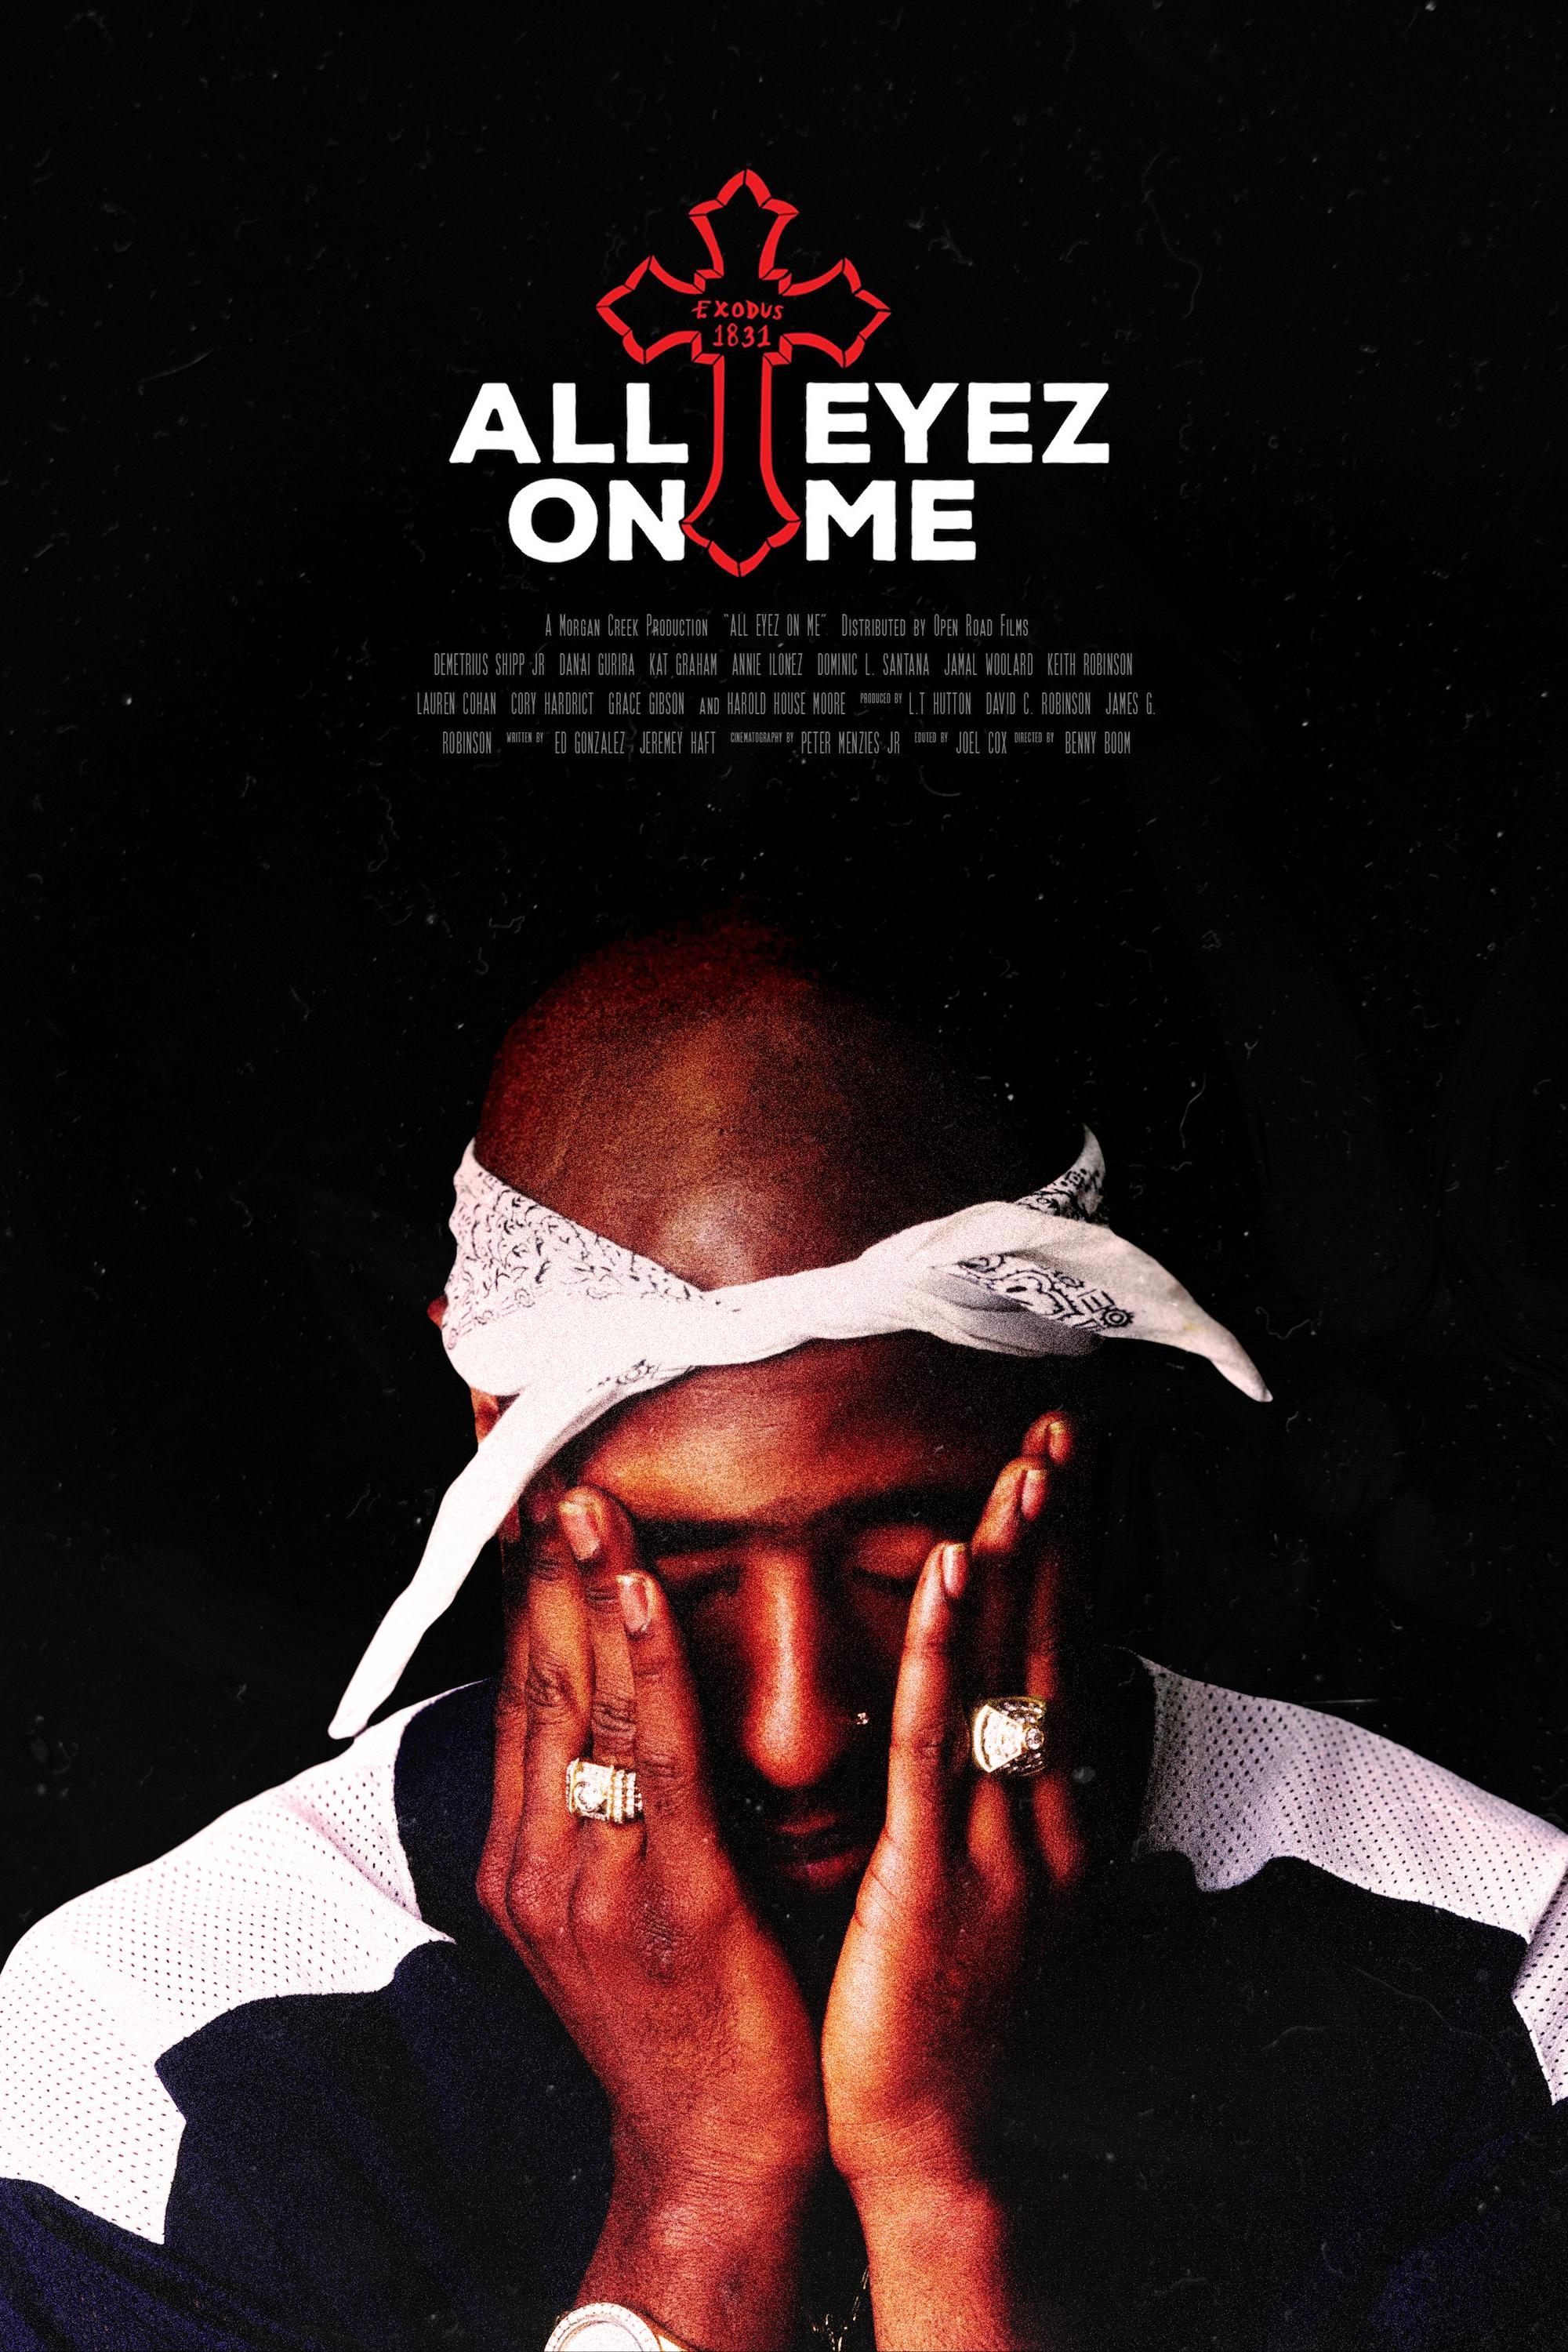 tupac shakur all eyez on me album free download